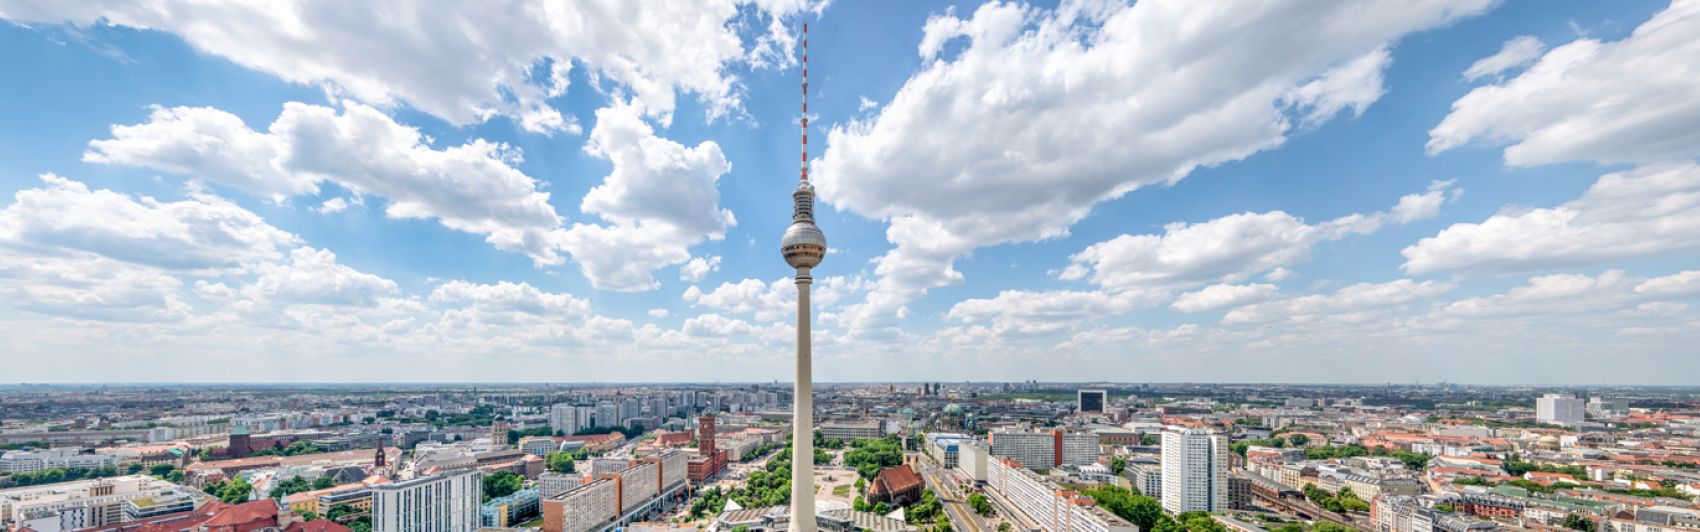 Berlin, Fernsehturm, Skyline, Himmel